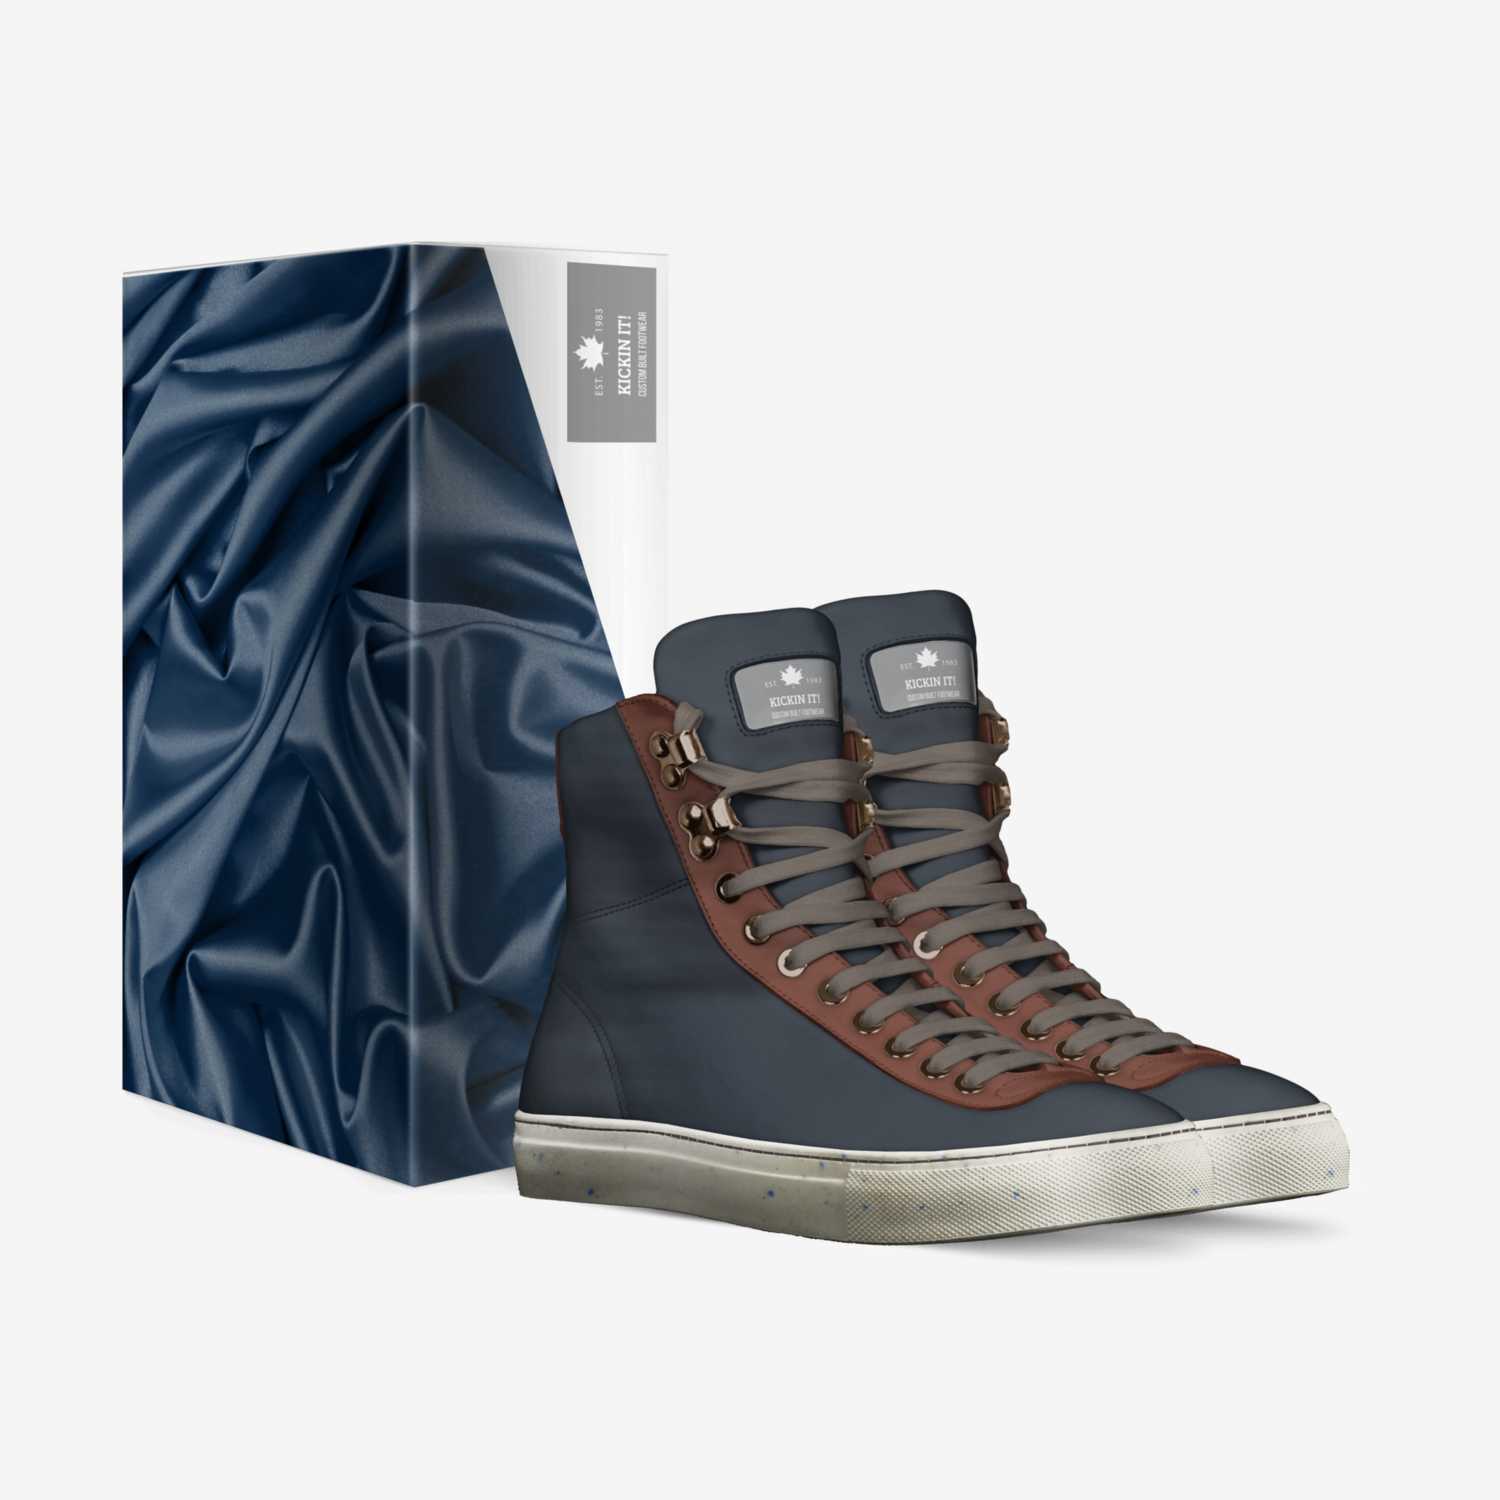 KICKIN IT! custom made in Italy shoes by Moffatt Gordon | Box view